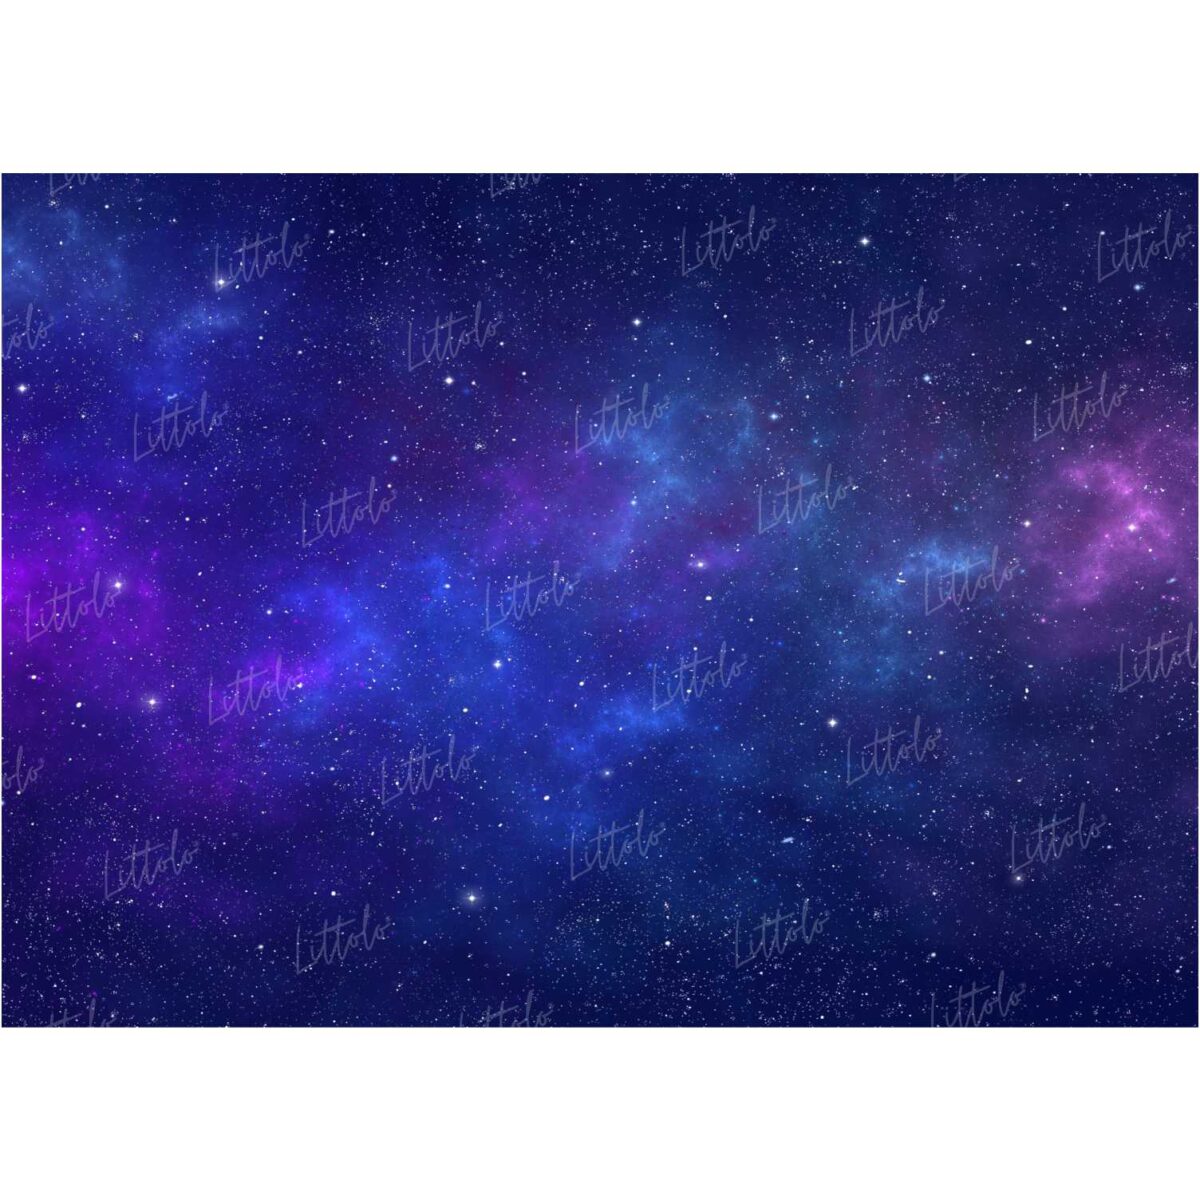 LB0001 Galaxy Texture Backdrop